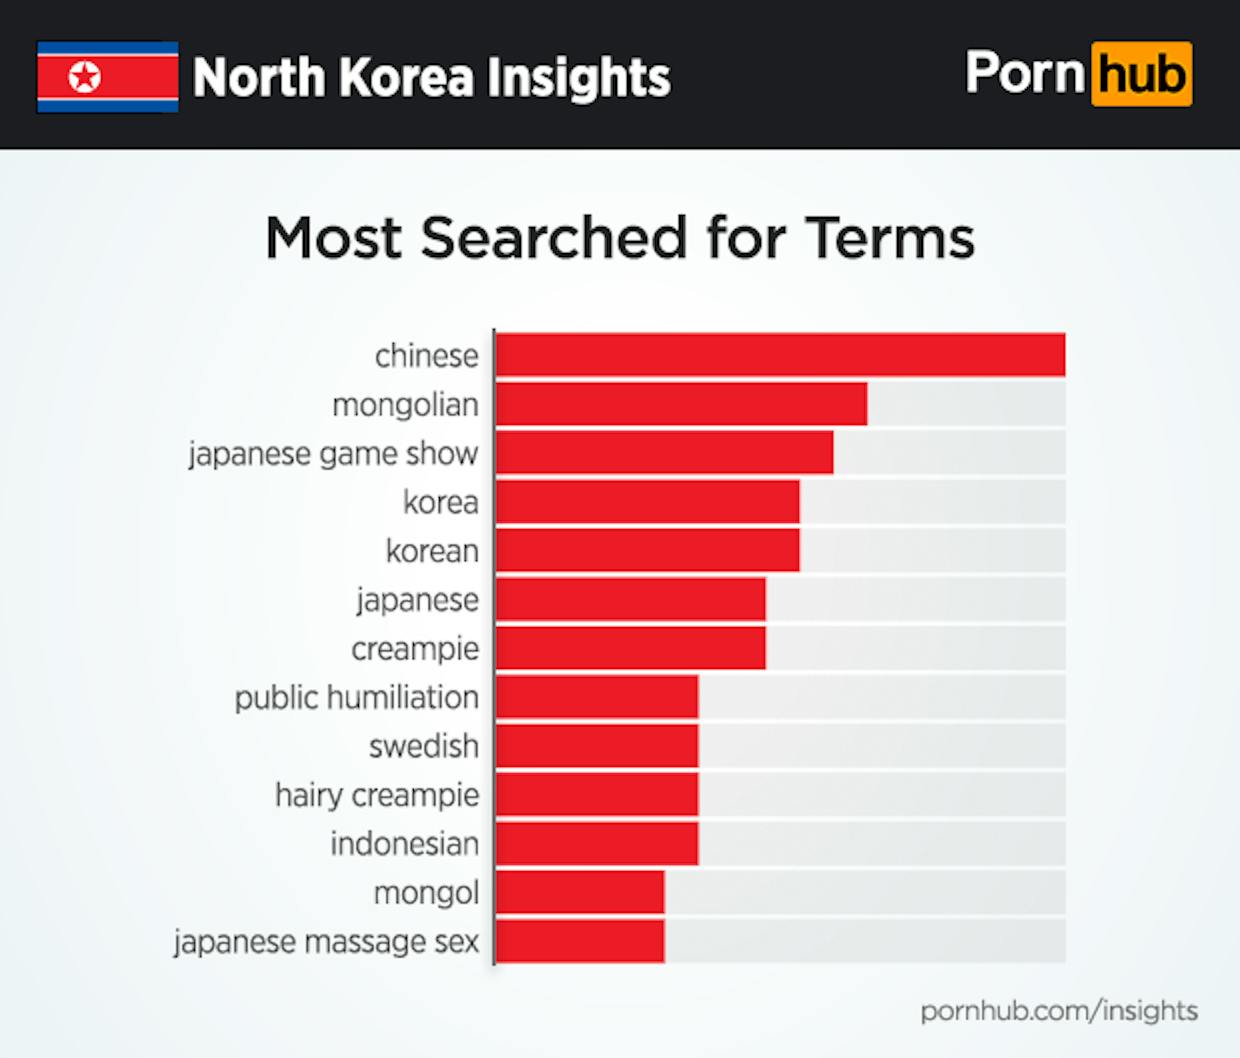 Creampie Sex Pornhub - Pornhub Just Released New Data on What North Koreans Watch ...